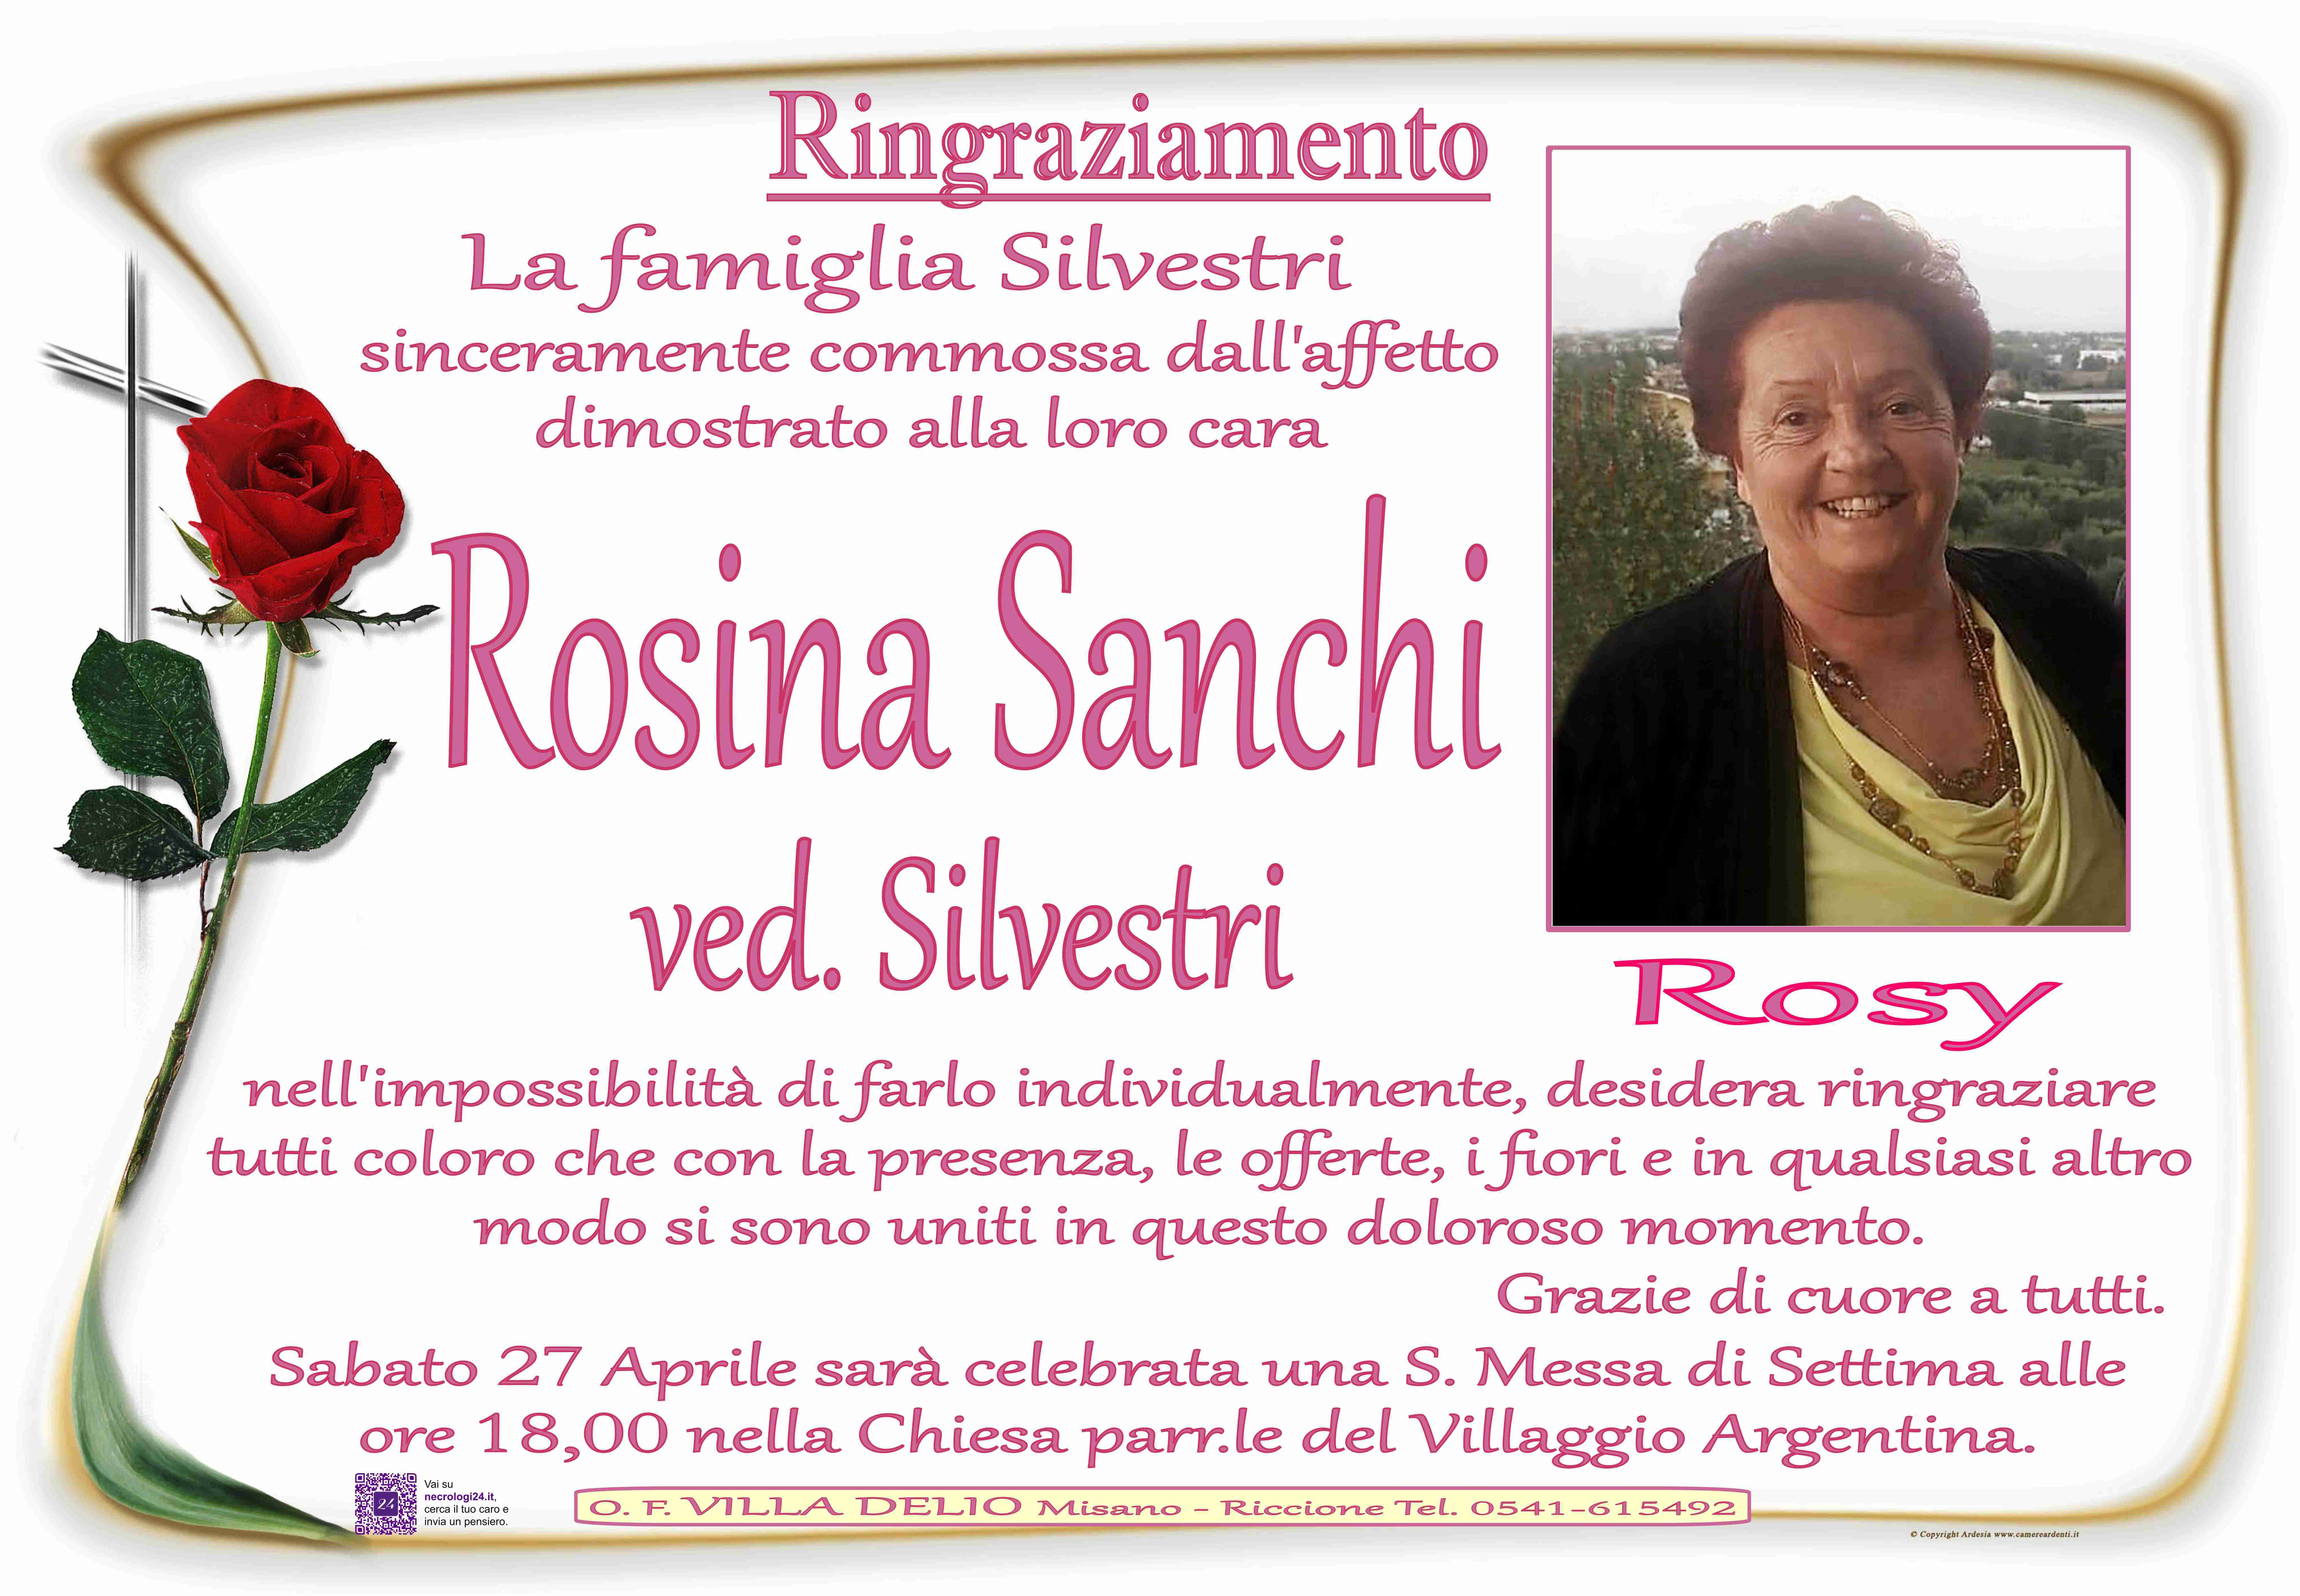 Rosina (Rosy) Sanchi